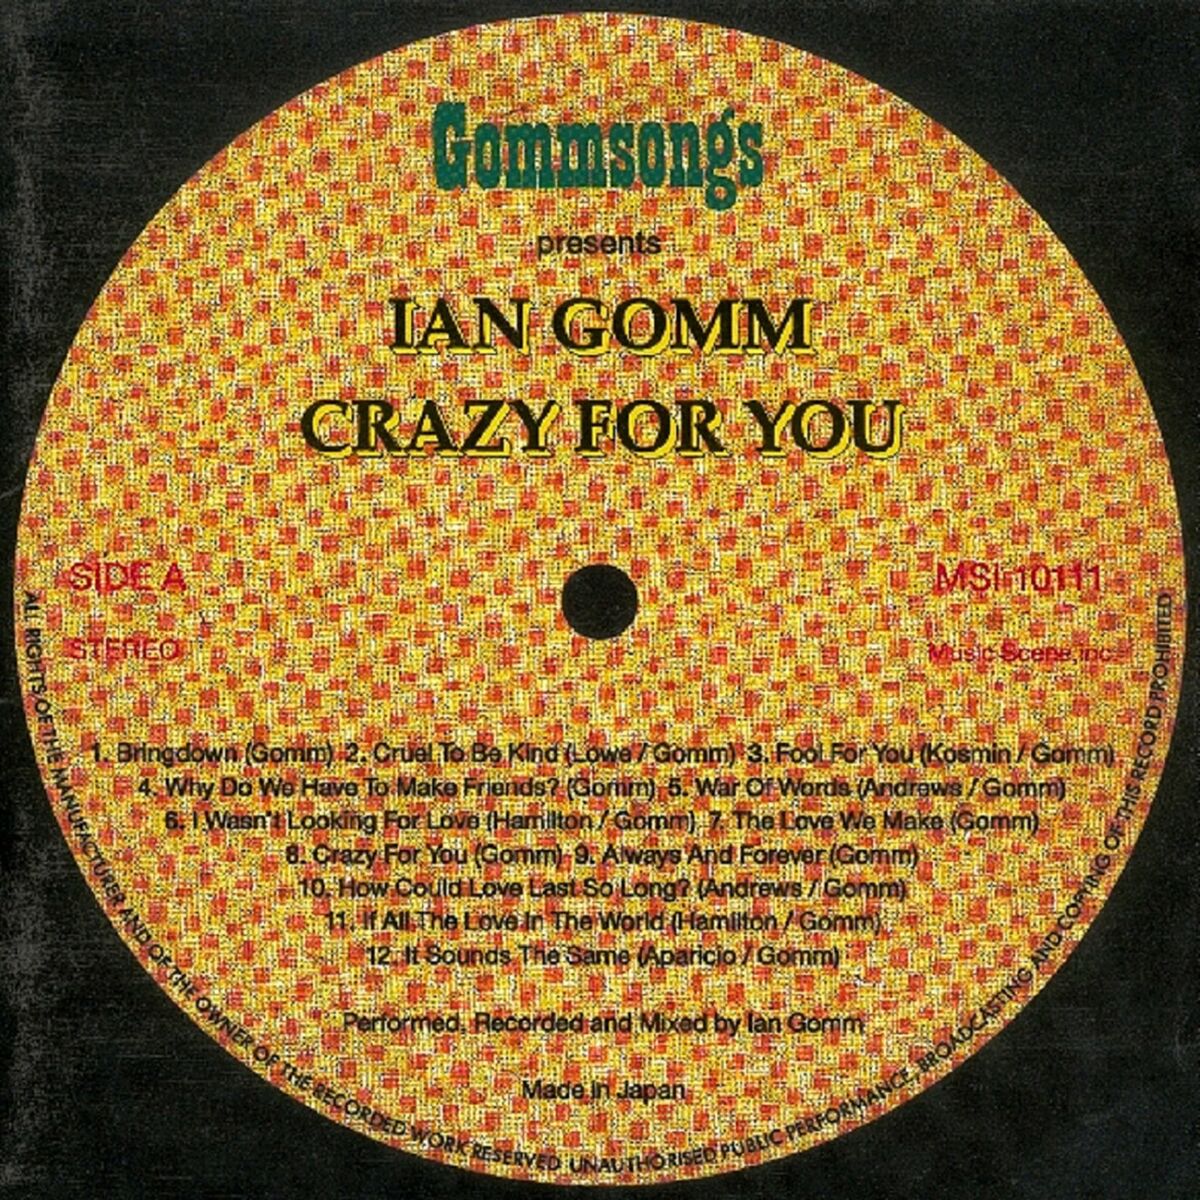 Ian Gomm: albums